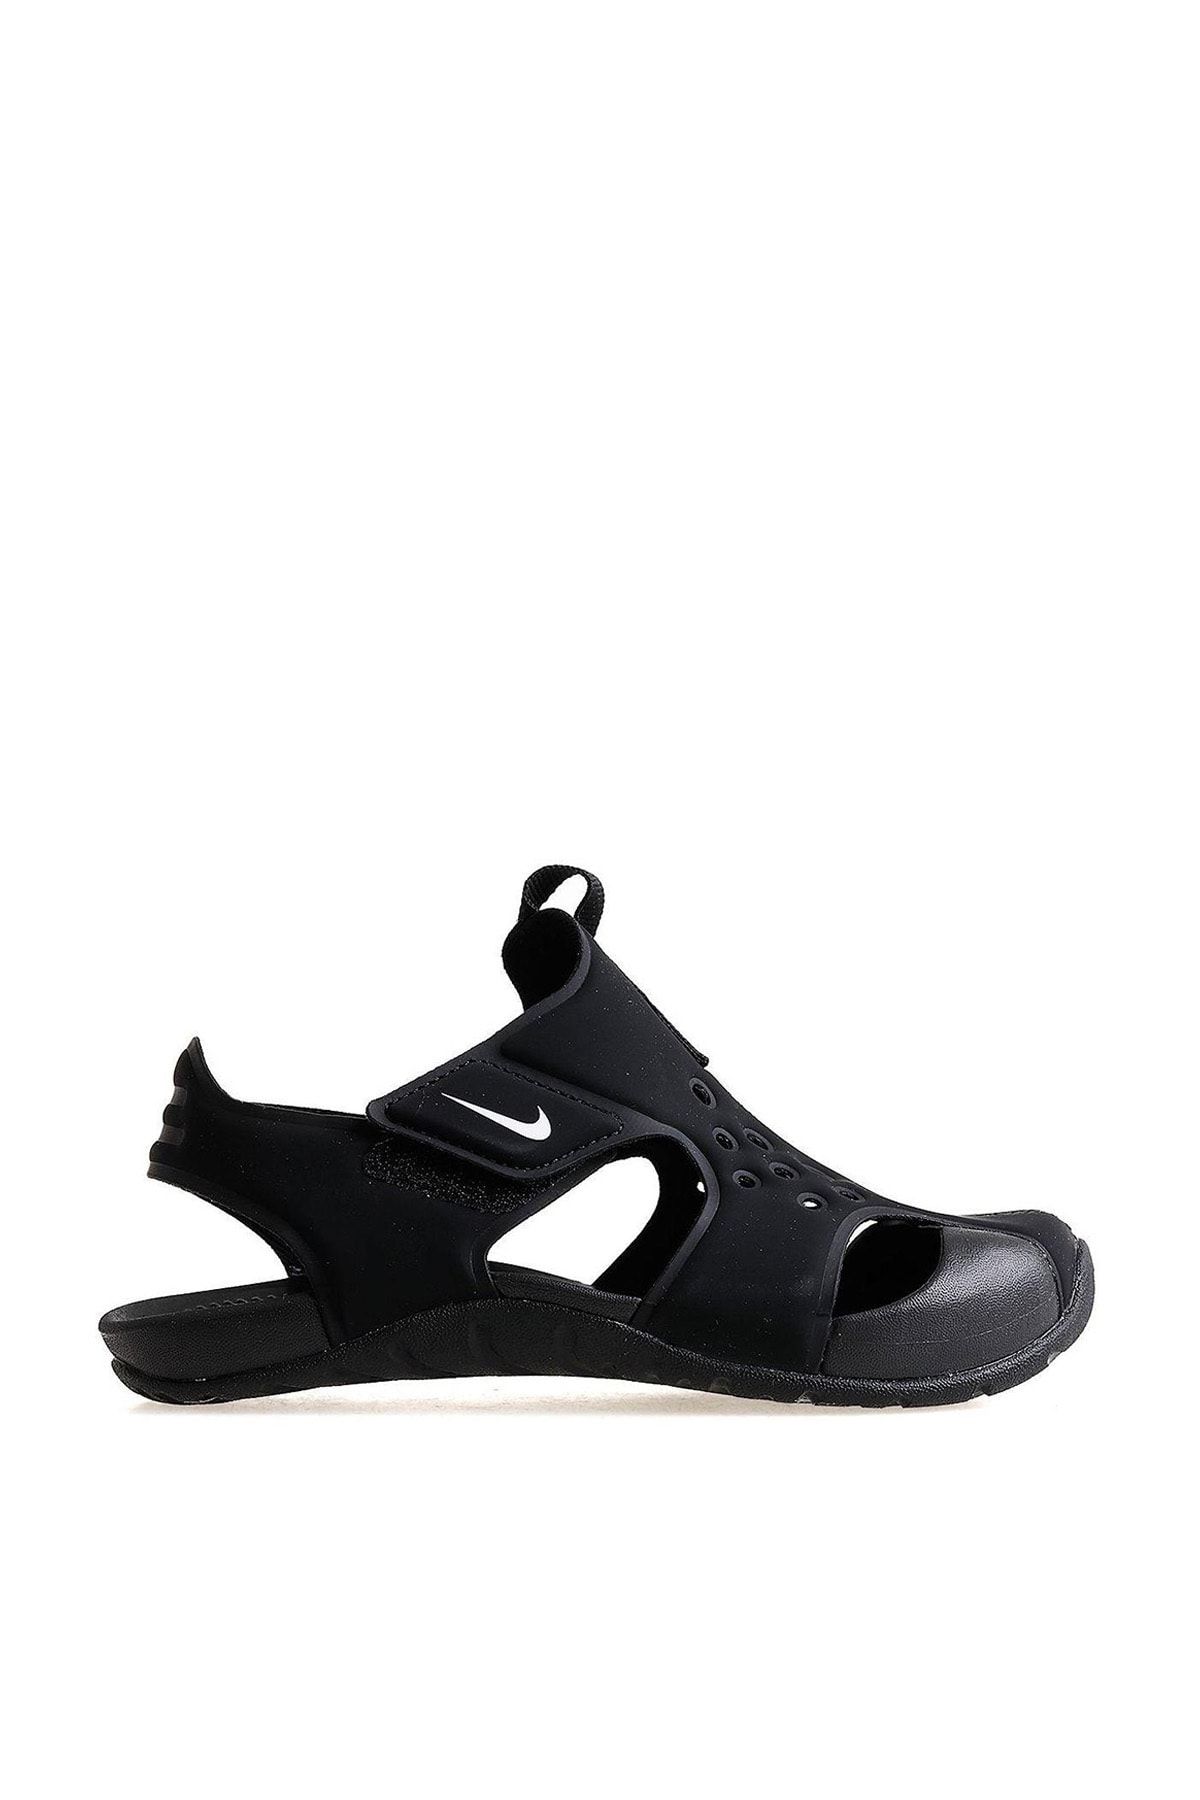 Nike سیاه 943826-001 Sunray Protect 2 Sandals Children